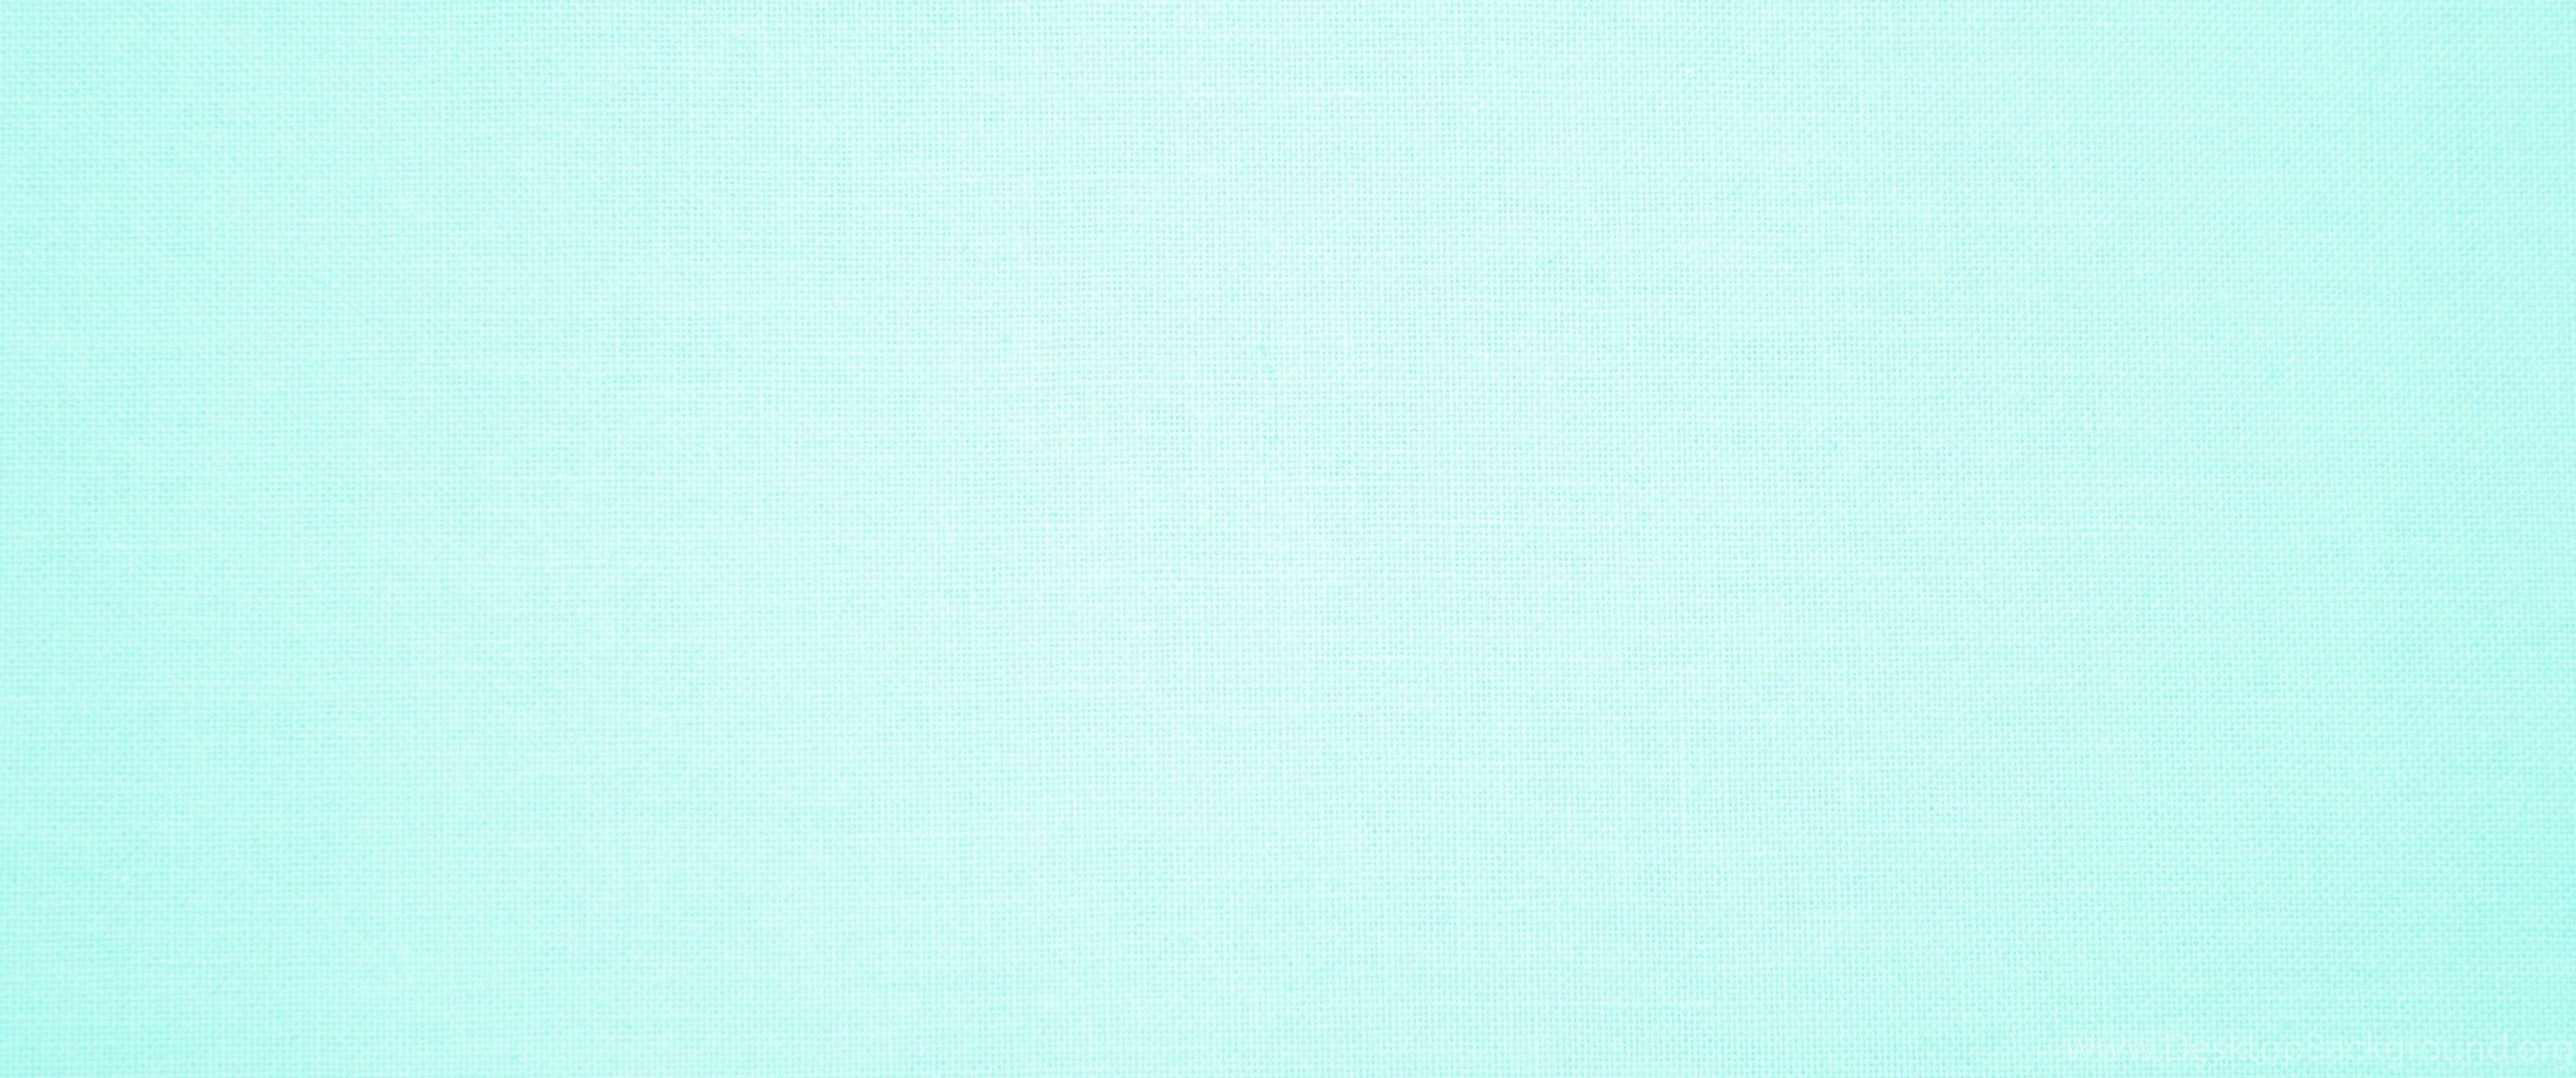 carta da parati color pastello hd,verde,blu,acqua,turchese,alzavola